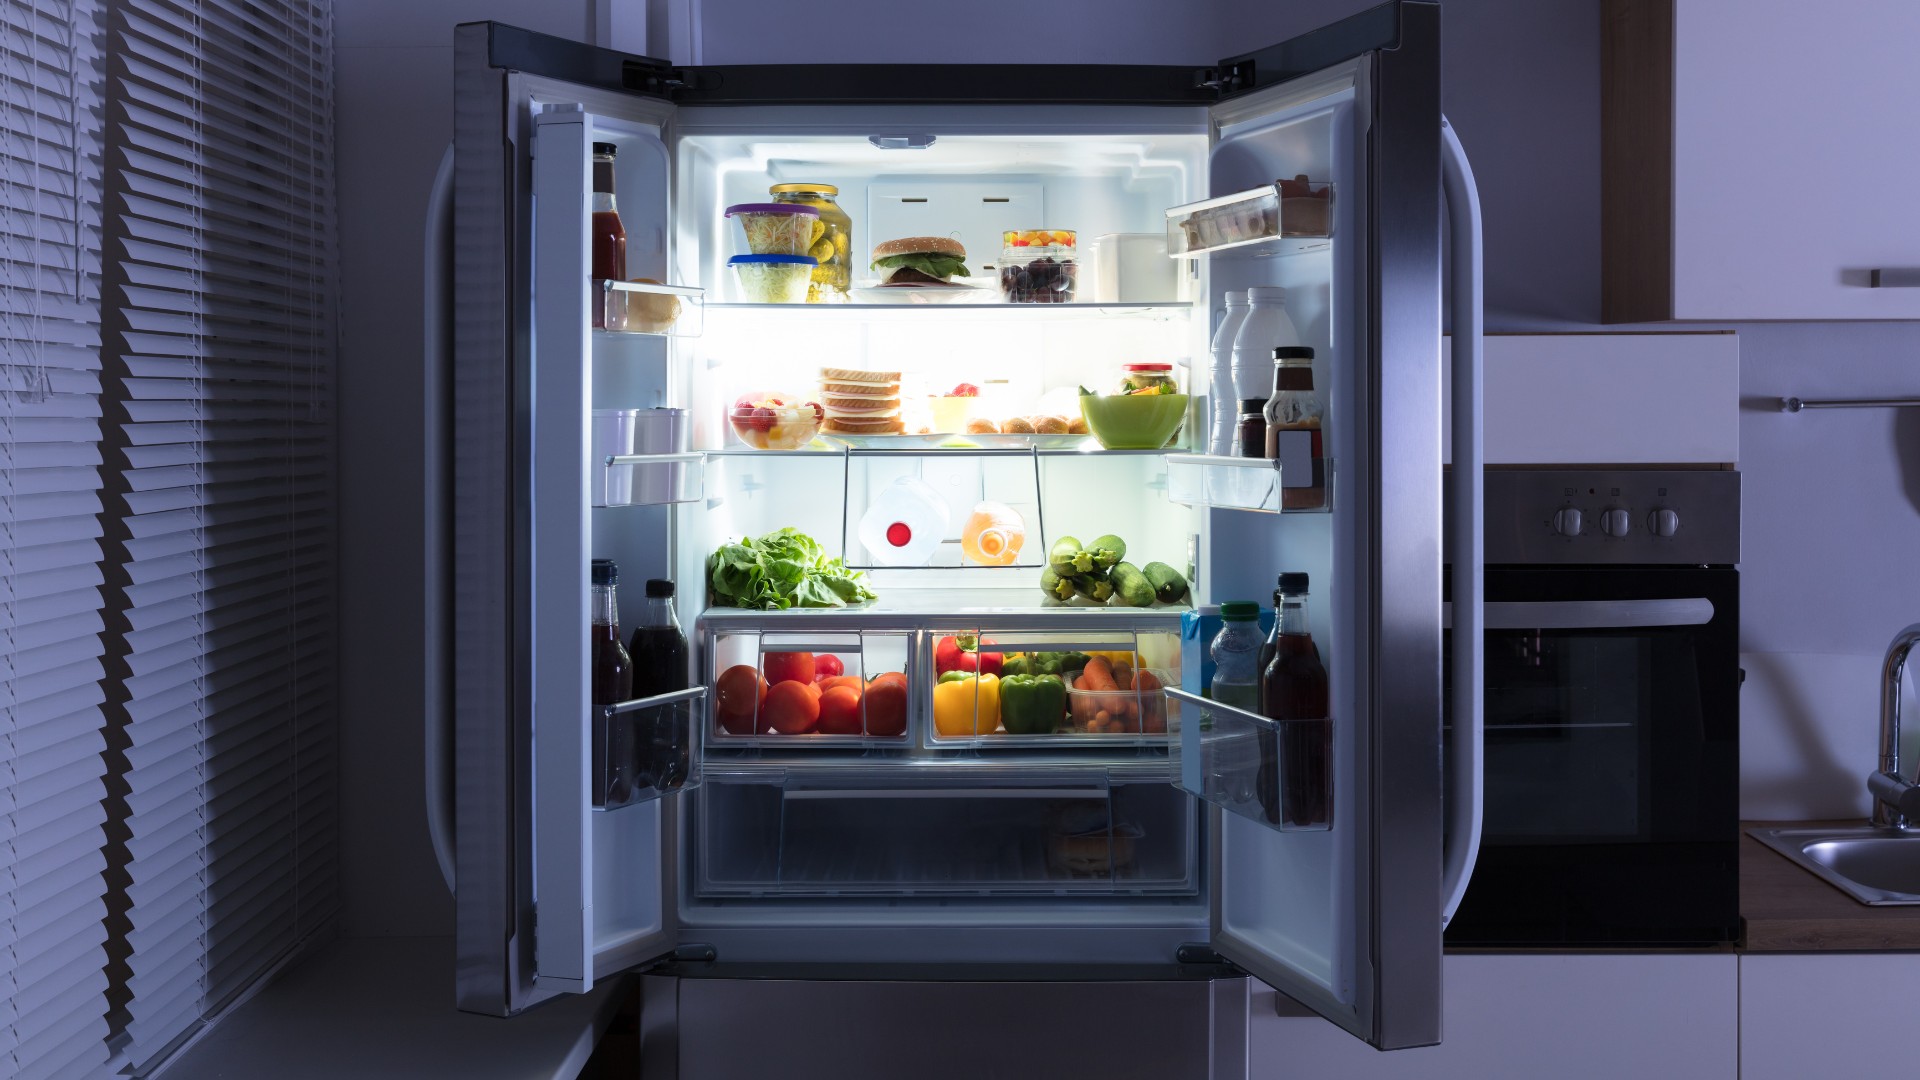 How To Defrost Samsung Refrigerator